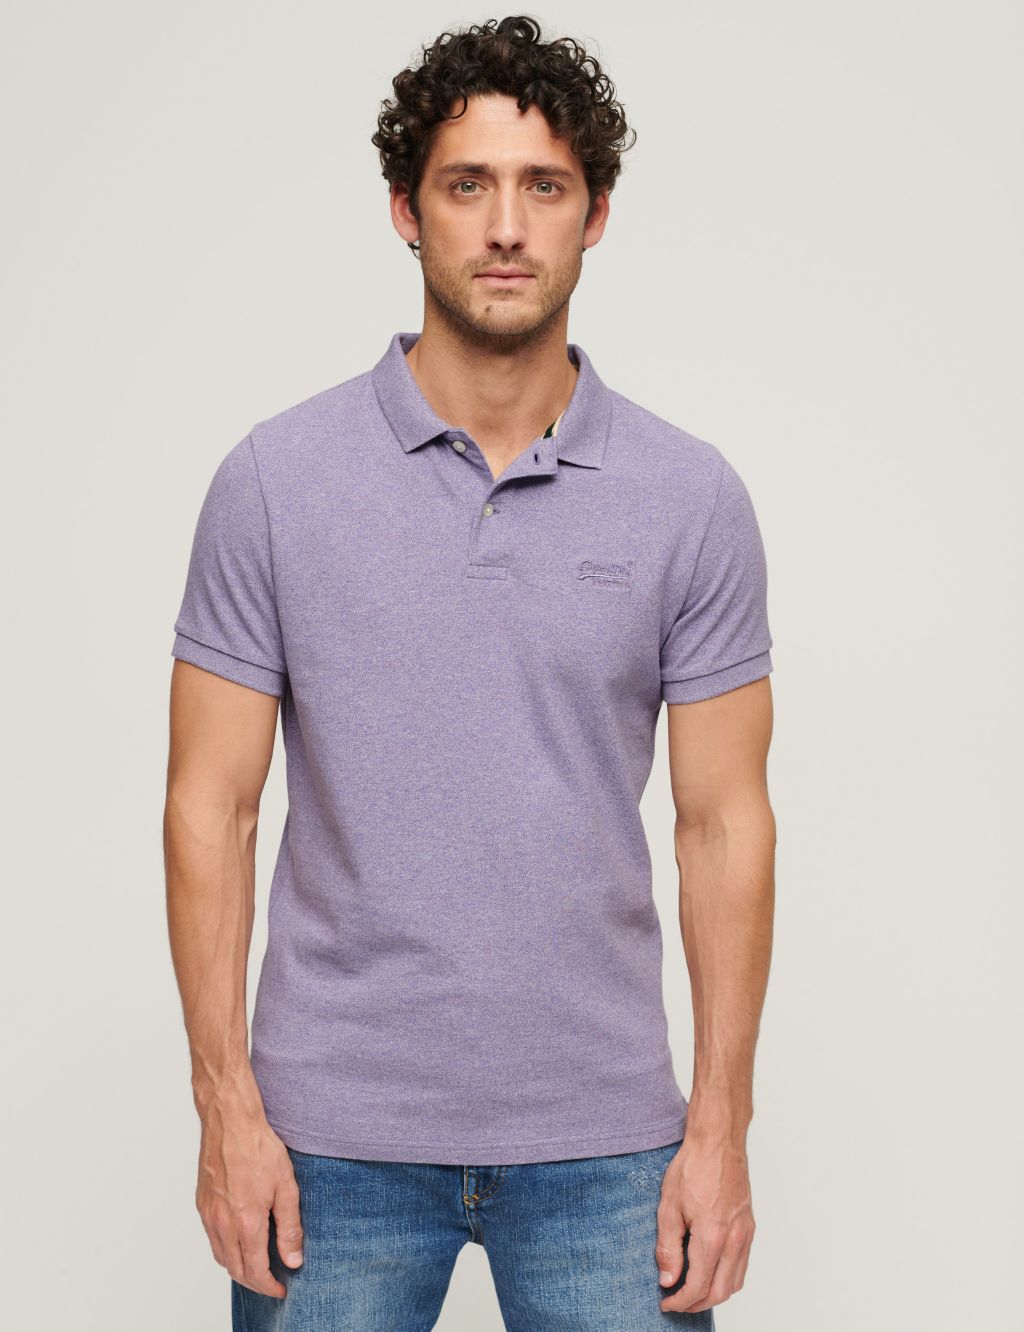 Men’s Purple Polo Shirts | M&S